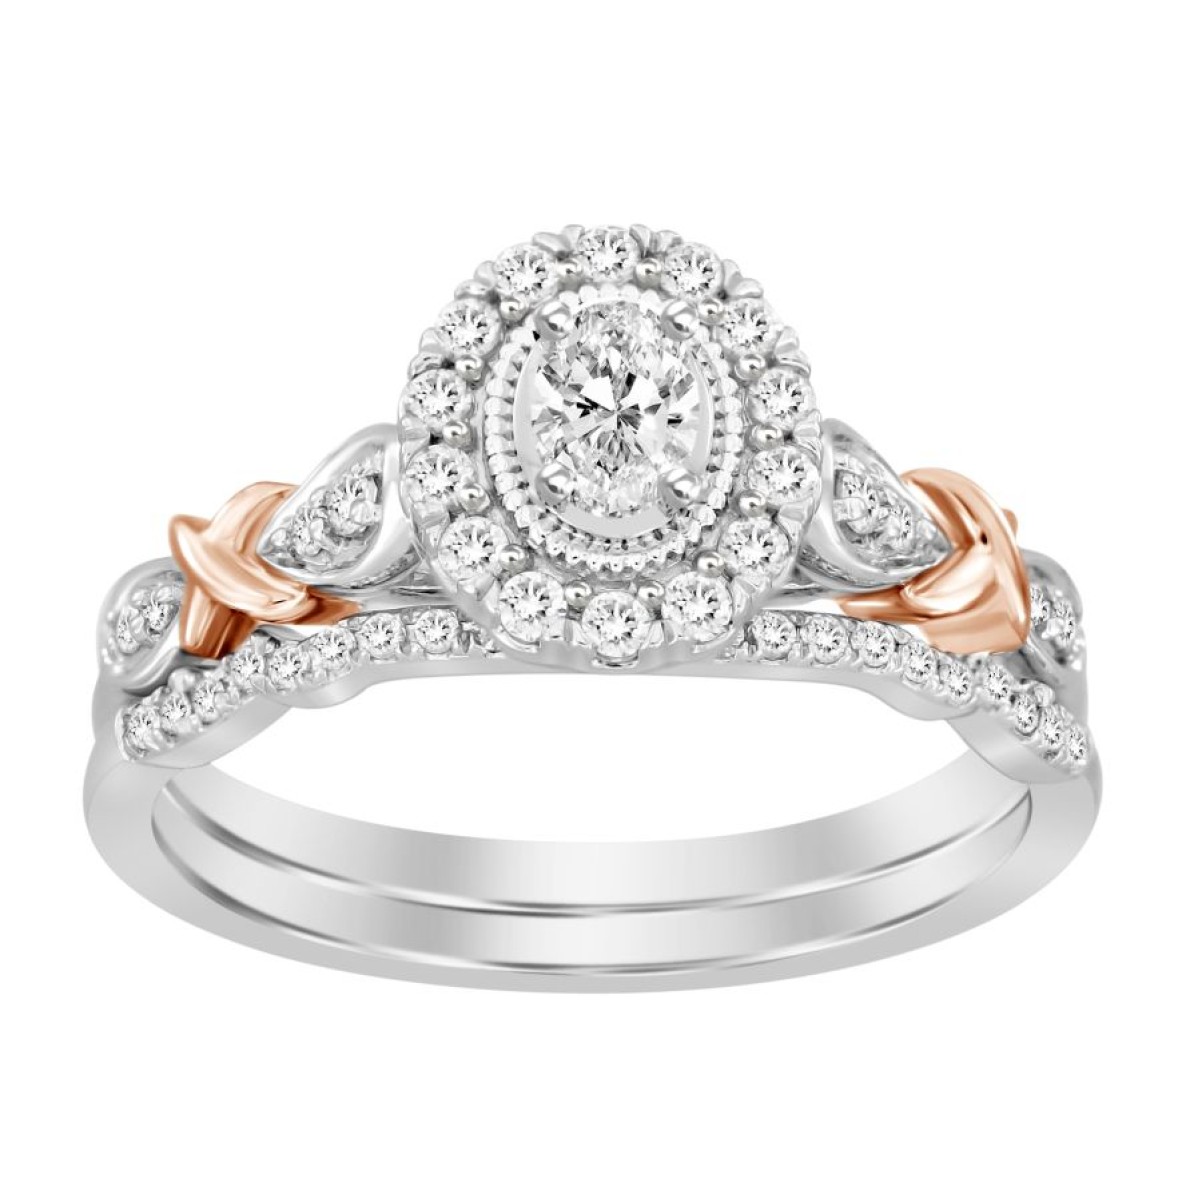 BRIDAL RING SET 0.50CT ROUND/OVAL DIAMOND 14K WHITE & ROSE GOLD